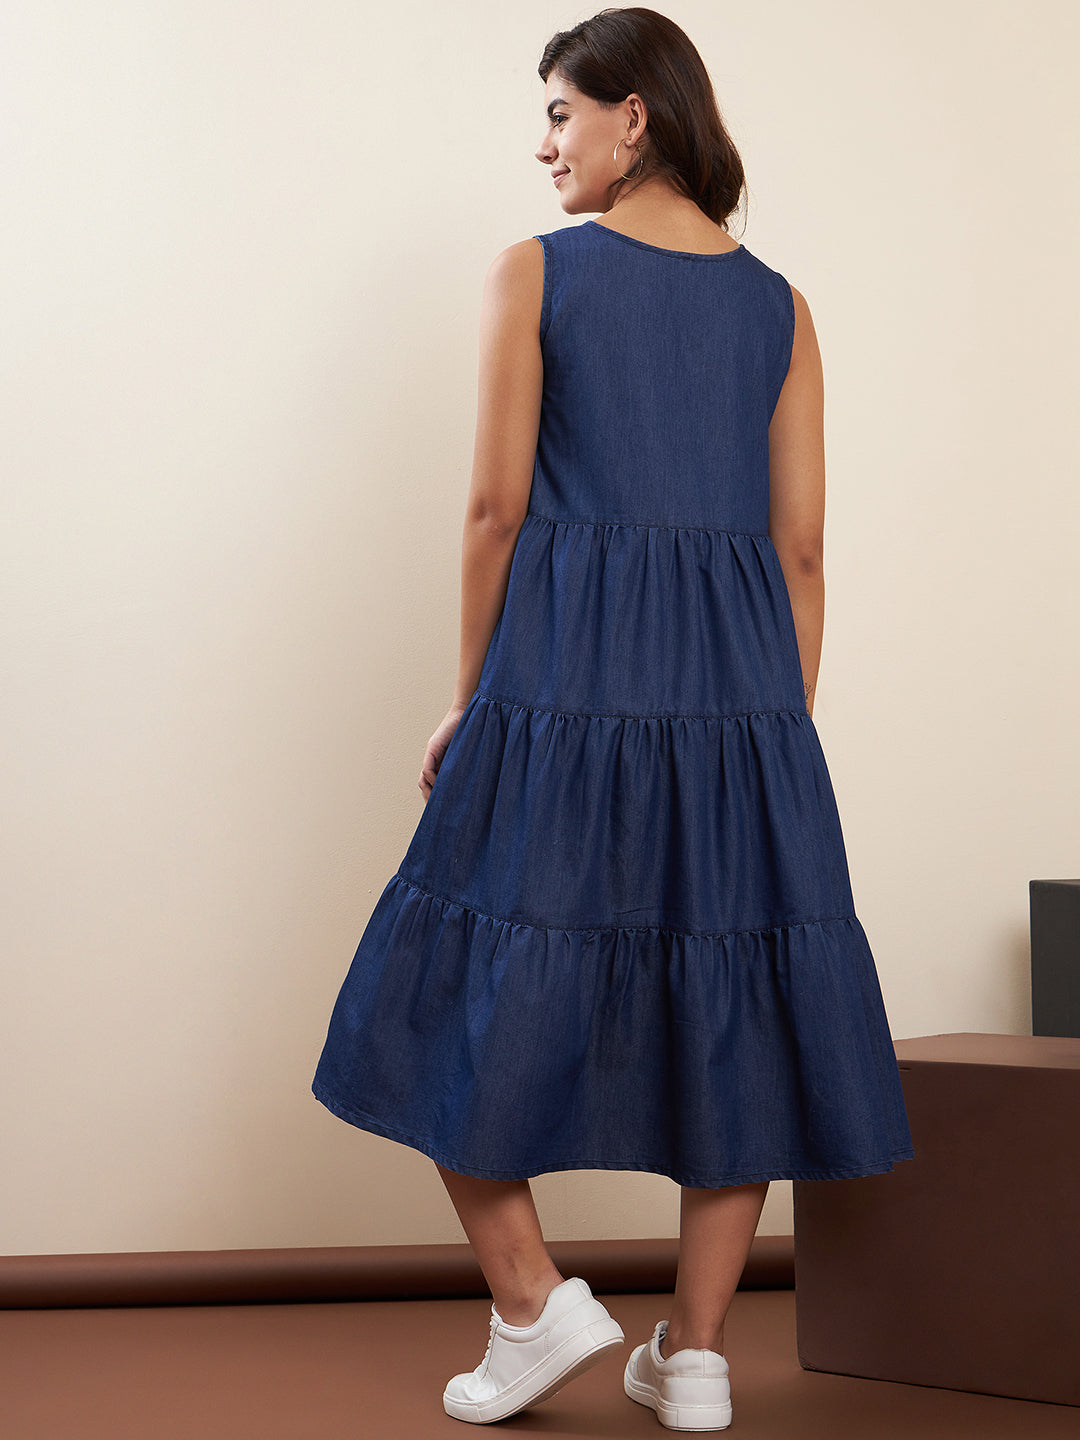 Blue-Denim-Lose-Fit-Tiered-Solid-Dress